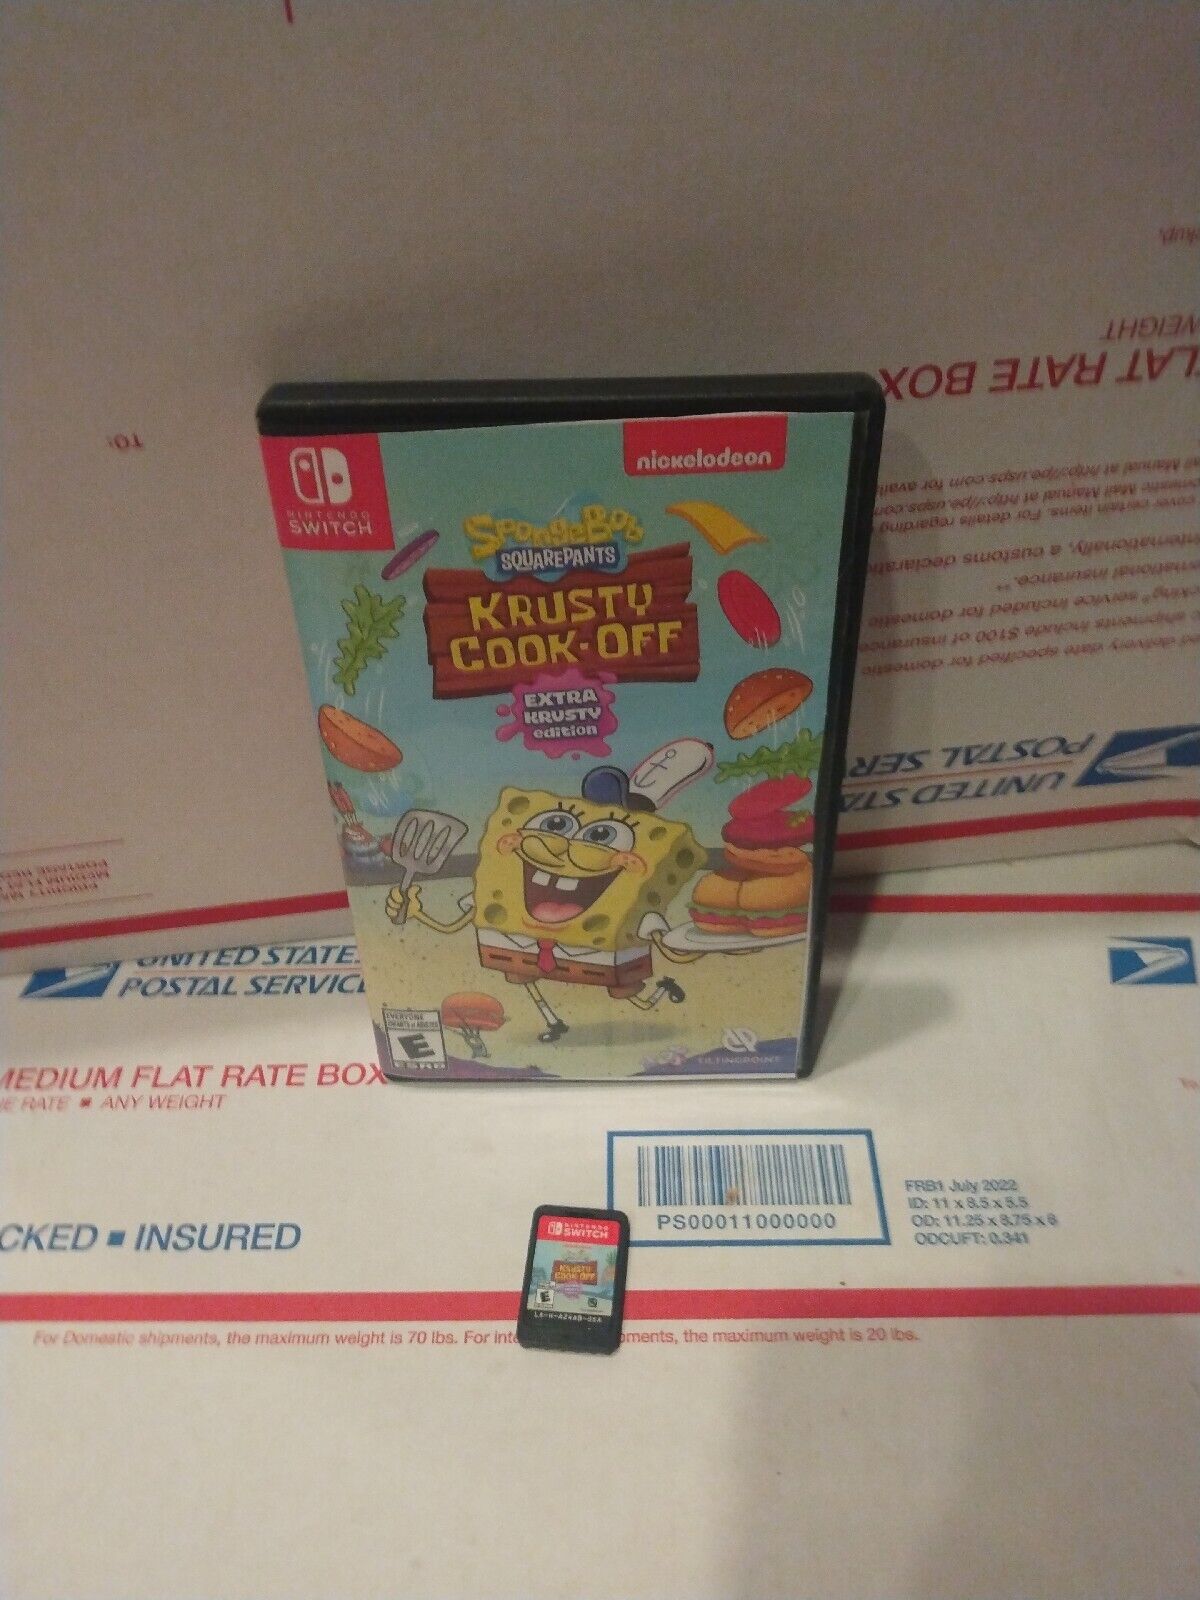 Switch Extra | Nintendo eBay Krusty Edition Krusty Spongebob Cook-Off